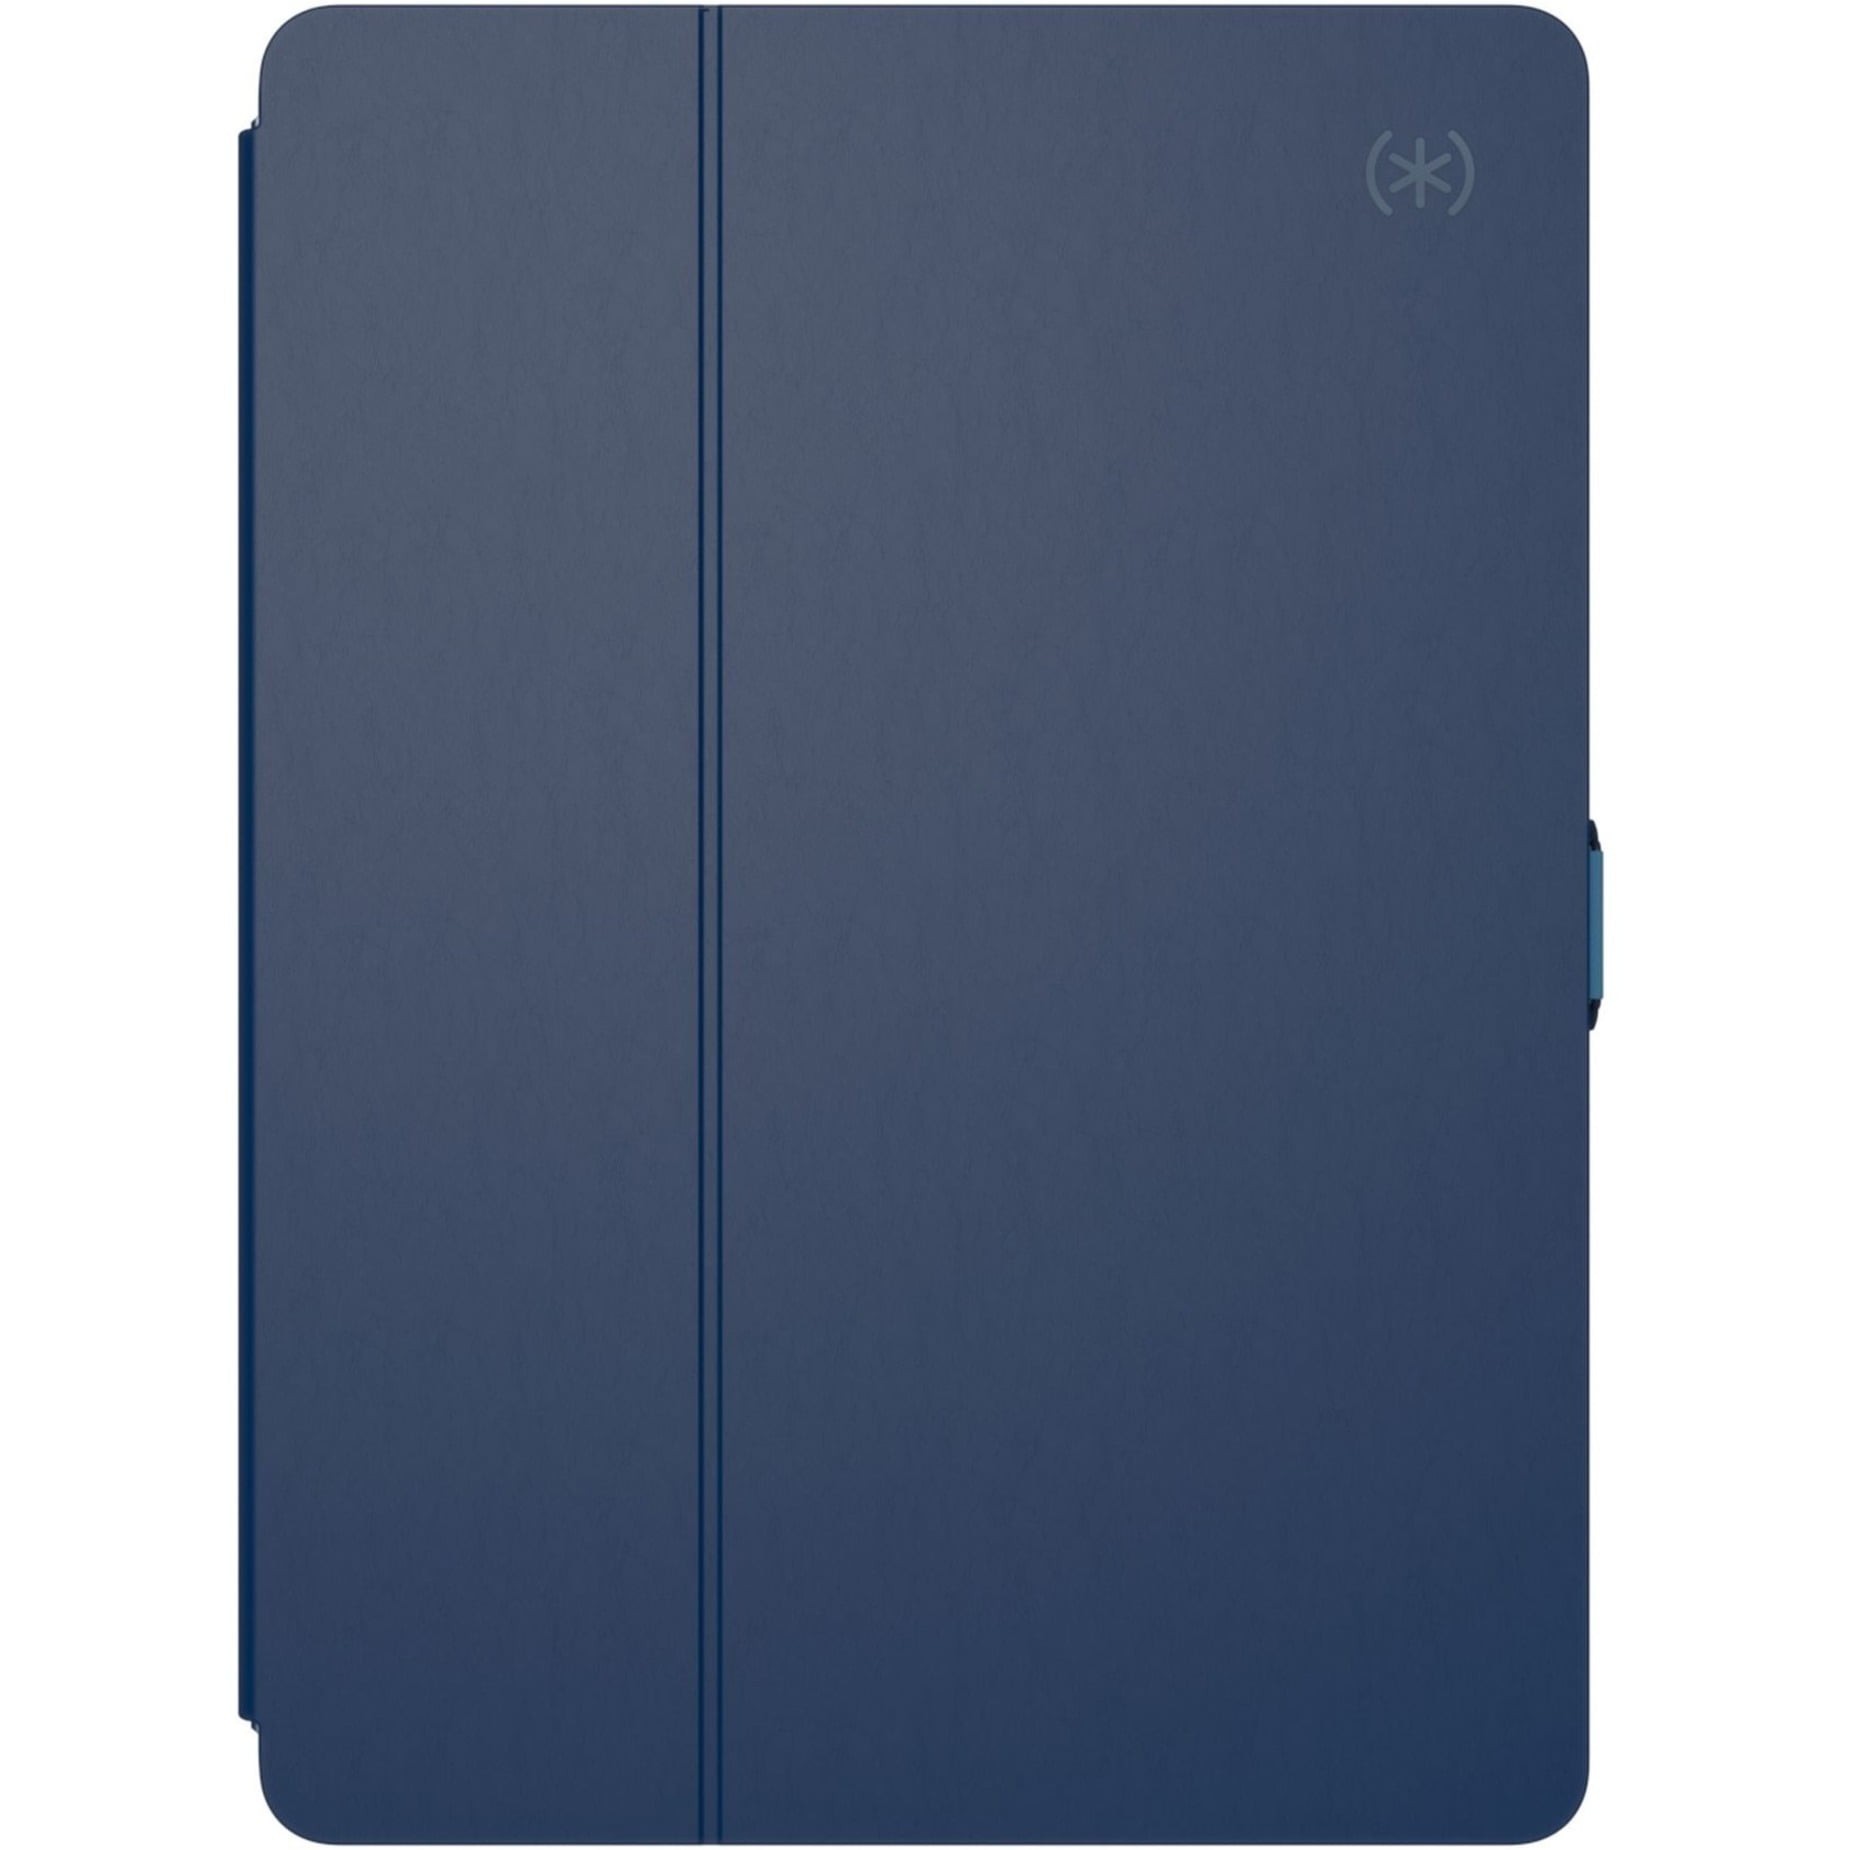 Speck Balance Folio iPad Mini (2021) Cases Verry Berry Red/Slate Grey